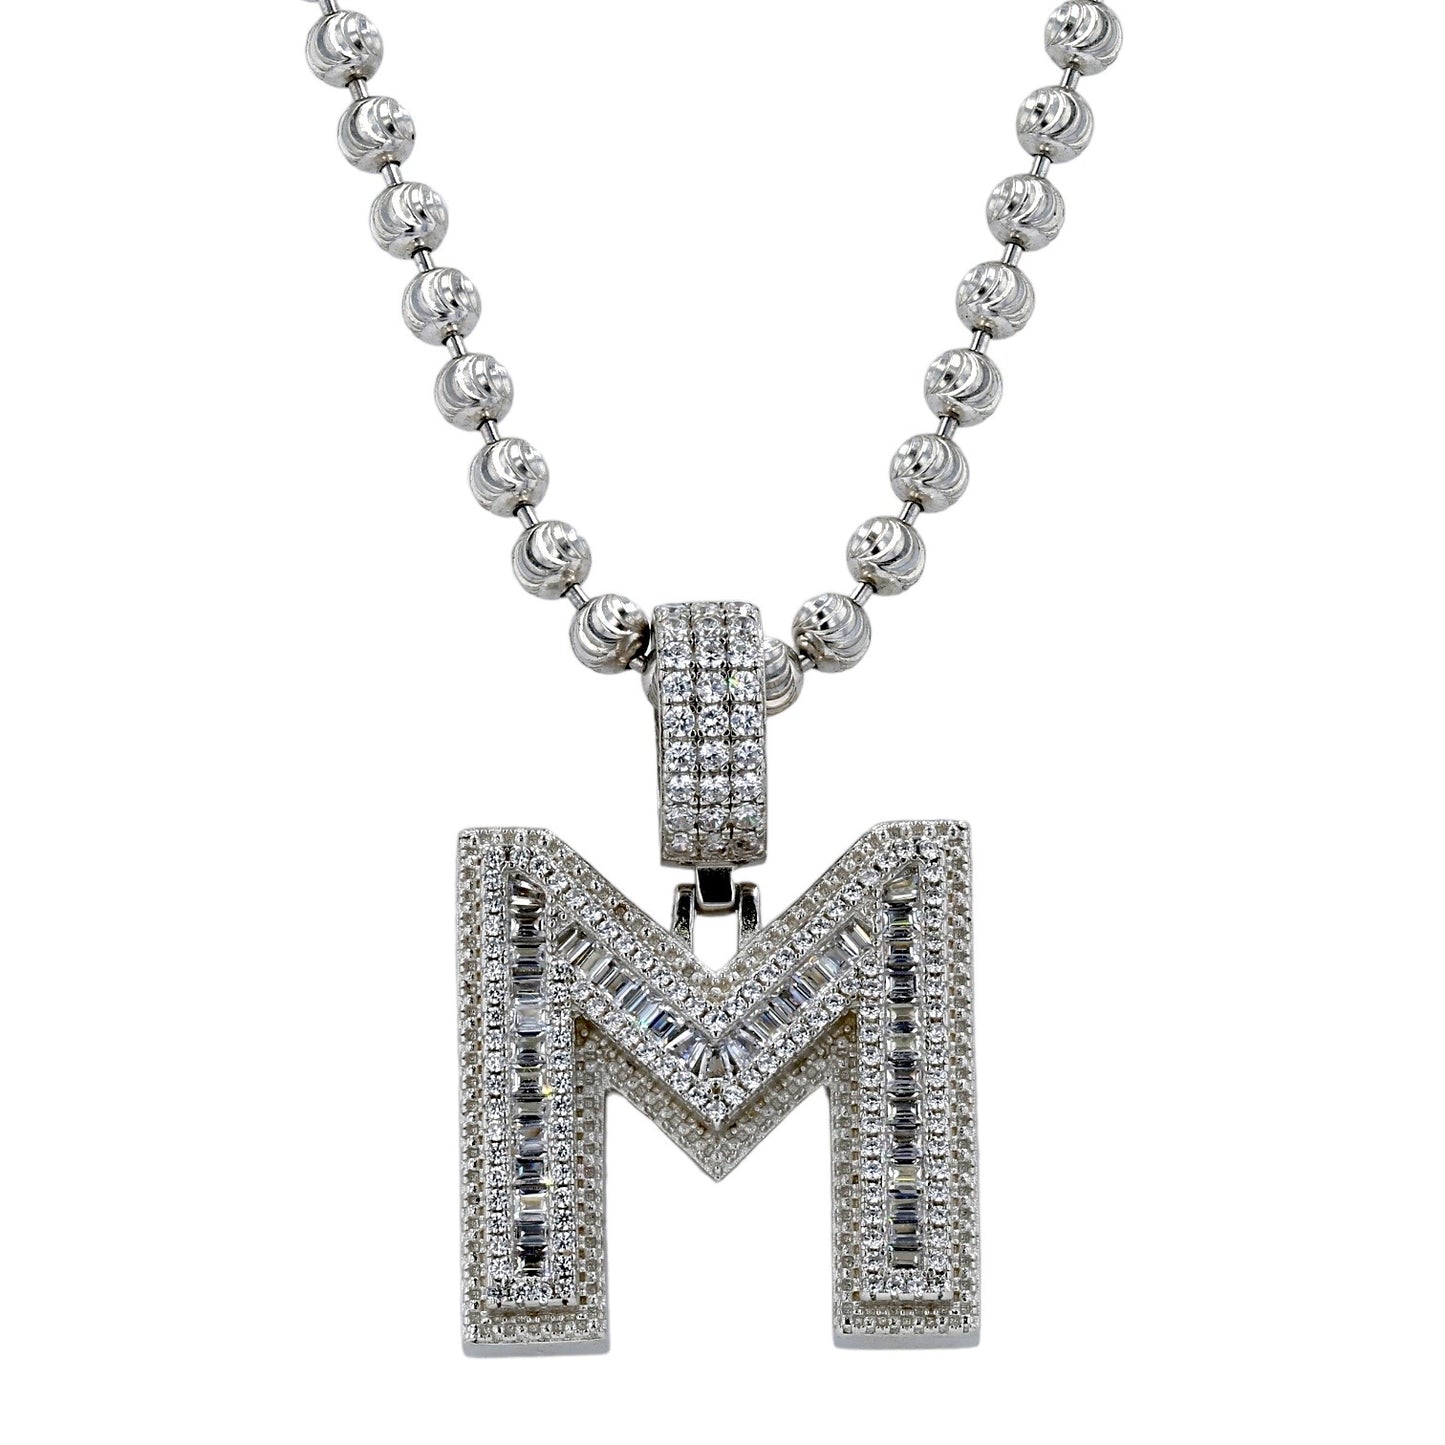 White silver 925 necklace M pendant